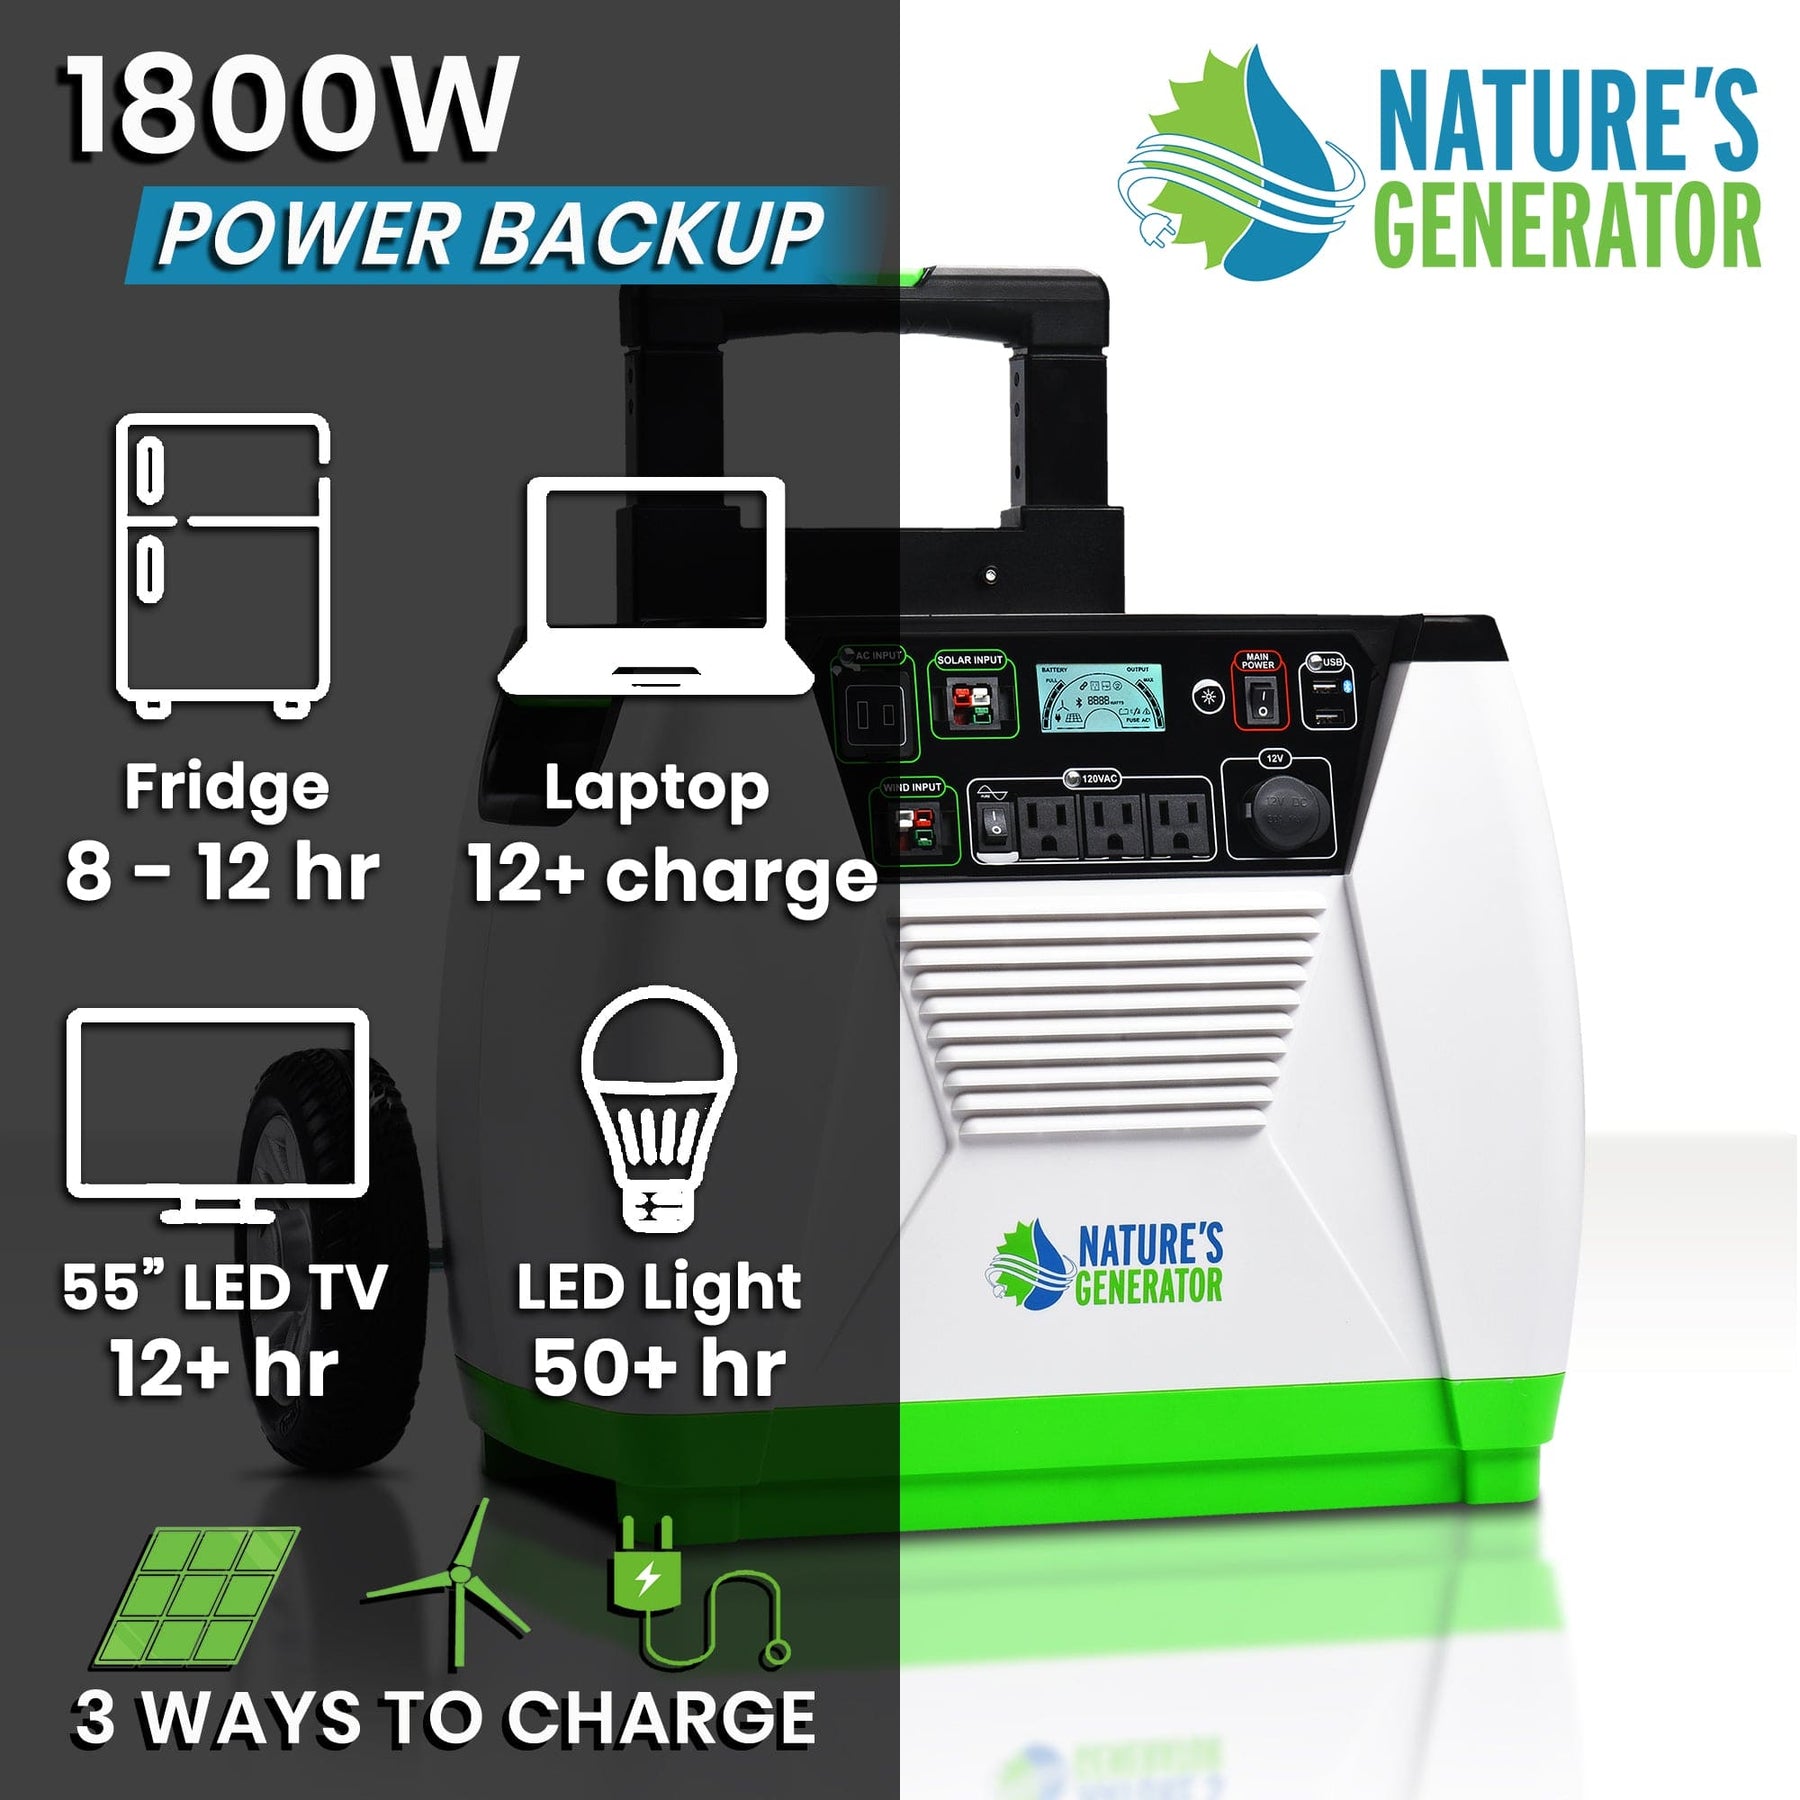 Nature's Generator 1800W Hover